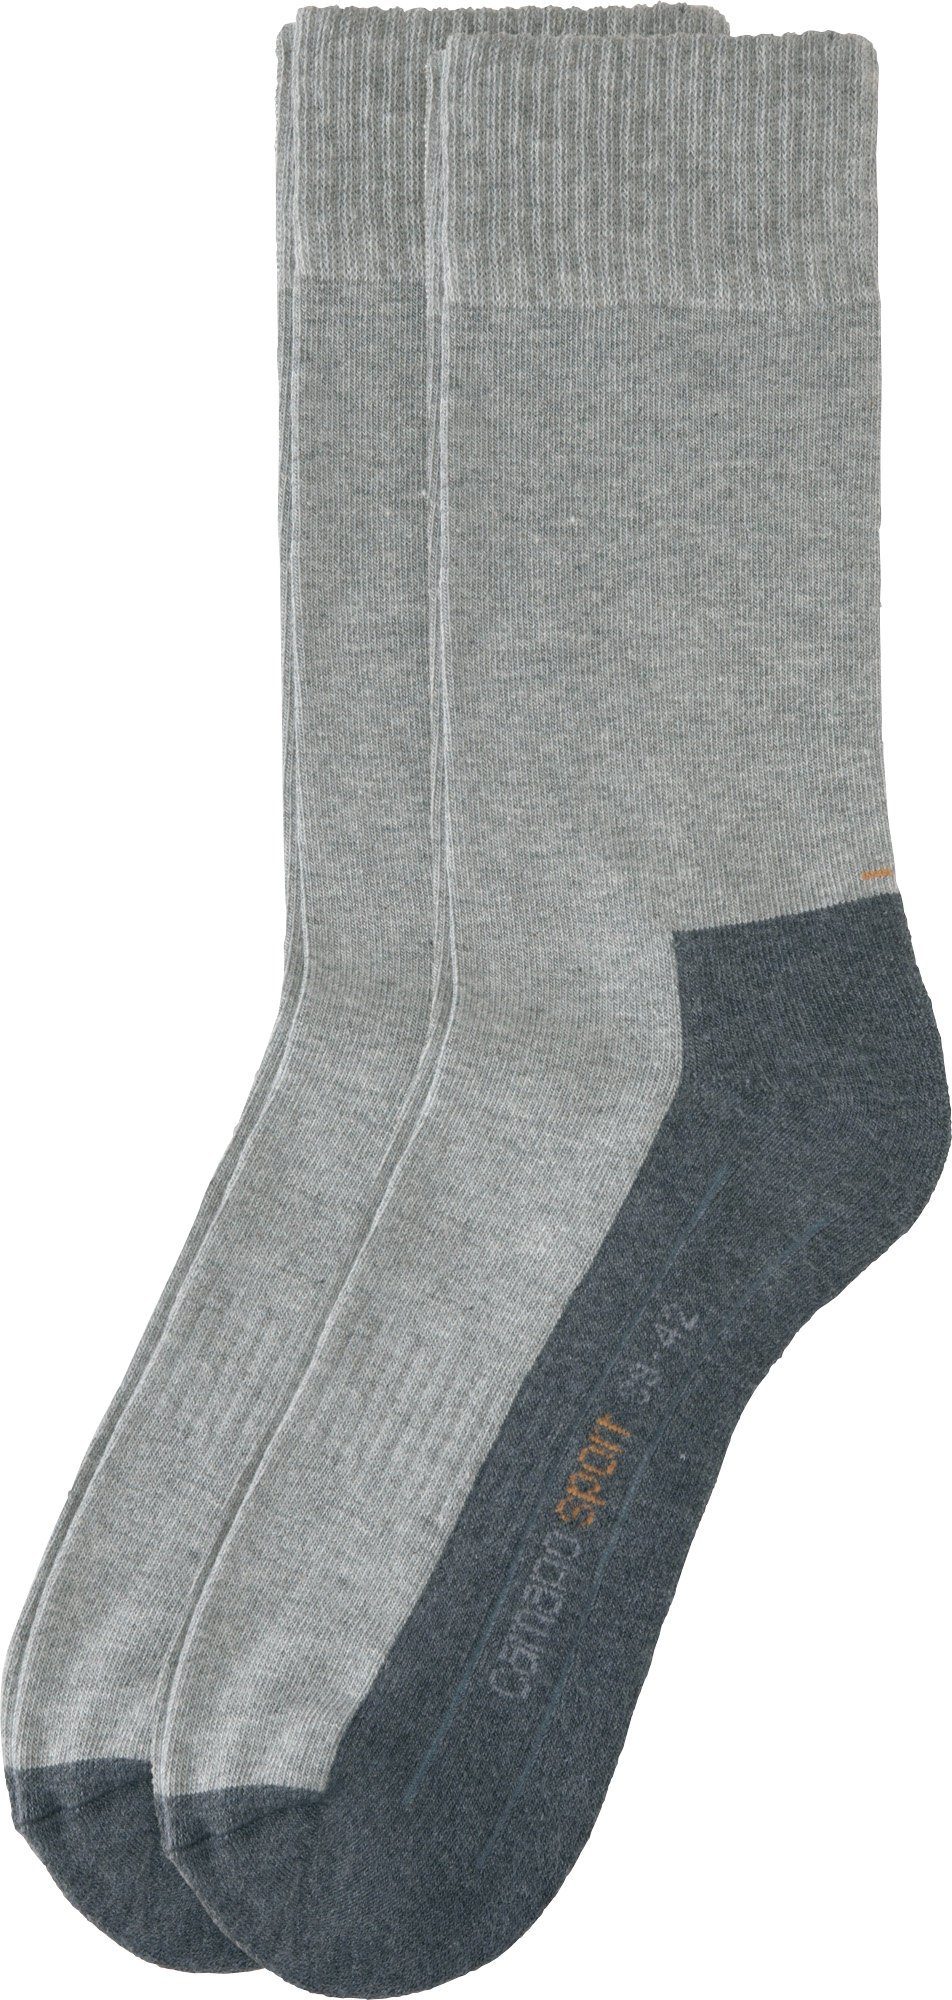 Unisex-Sportsocken Paar 2 hellgrau Camano Uni Socken